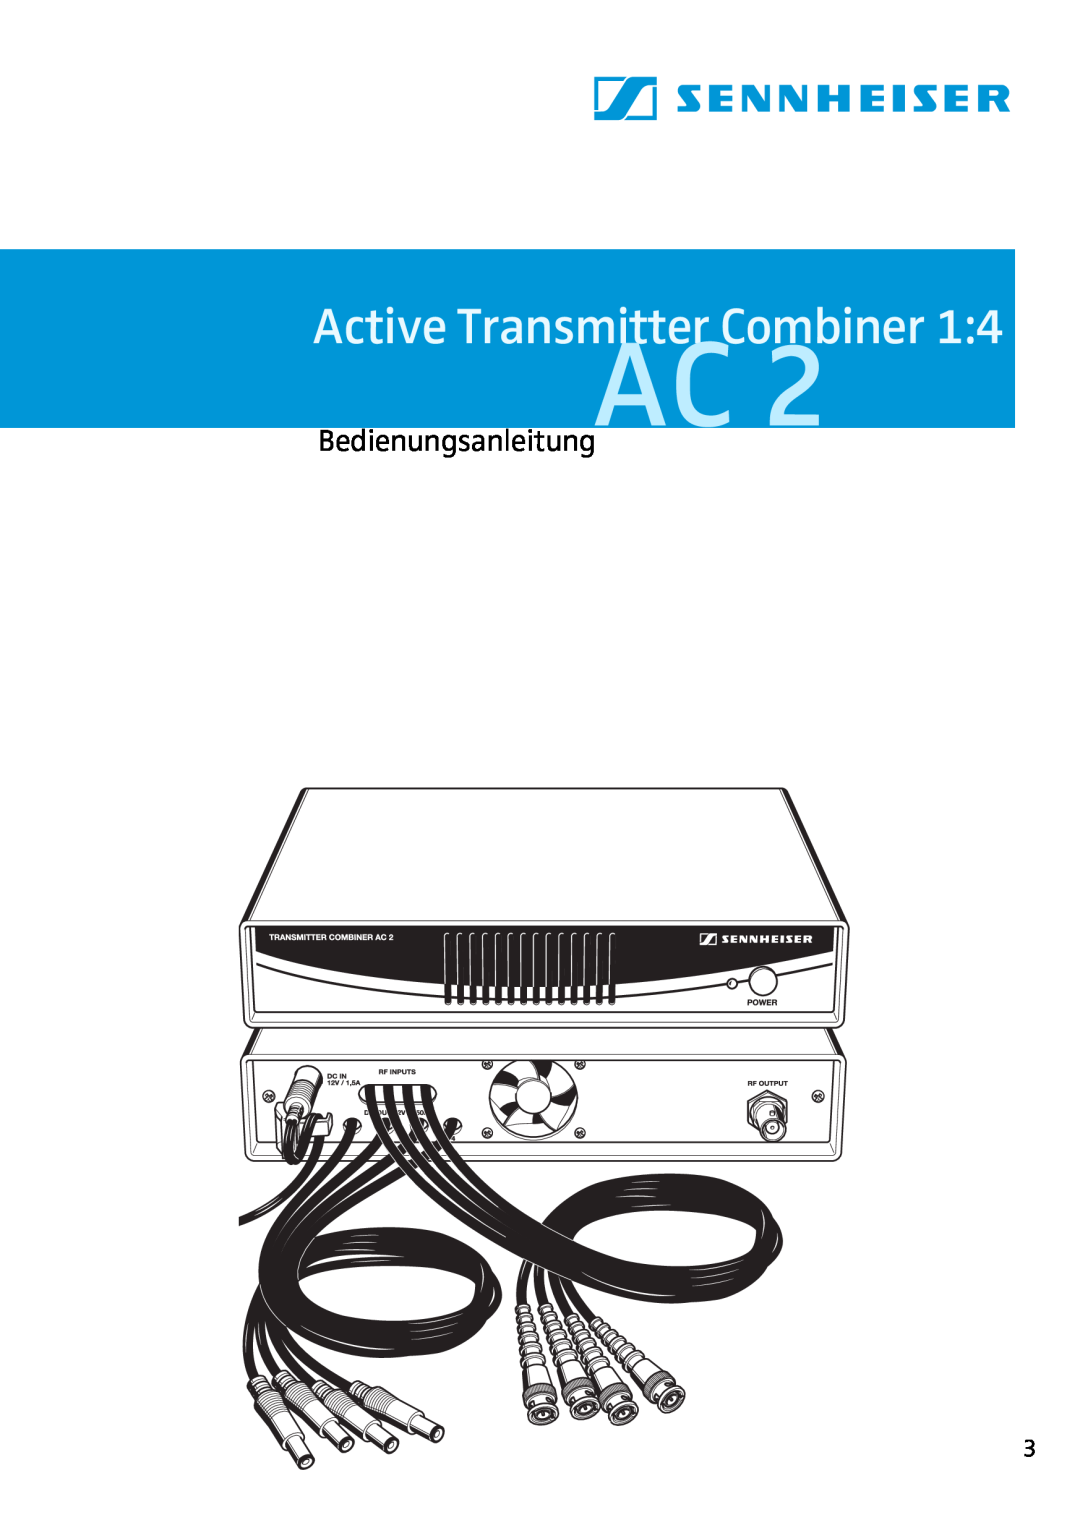 Sennheiser AC2 manual Active Transmitter Combiner, Bedienungsanleitung 